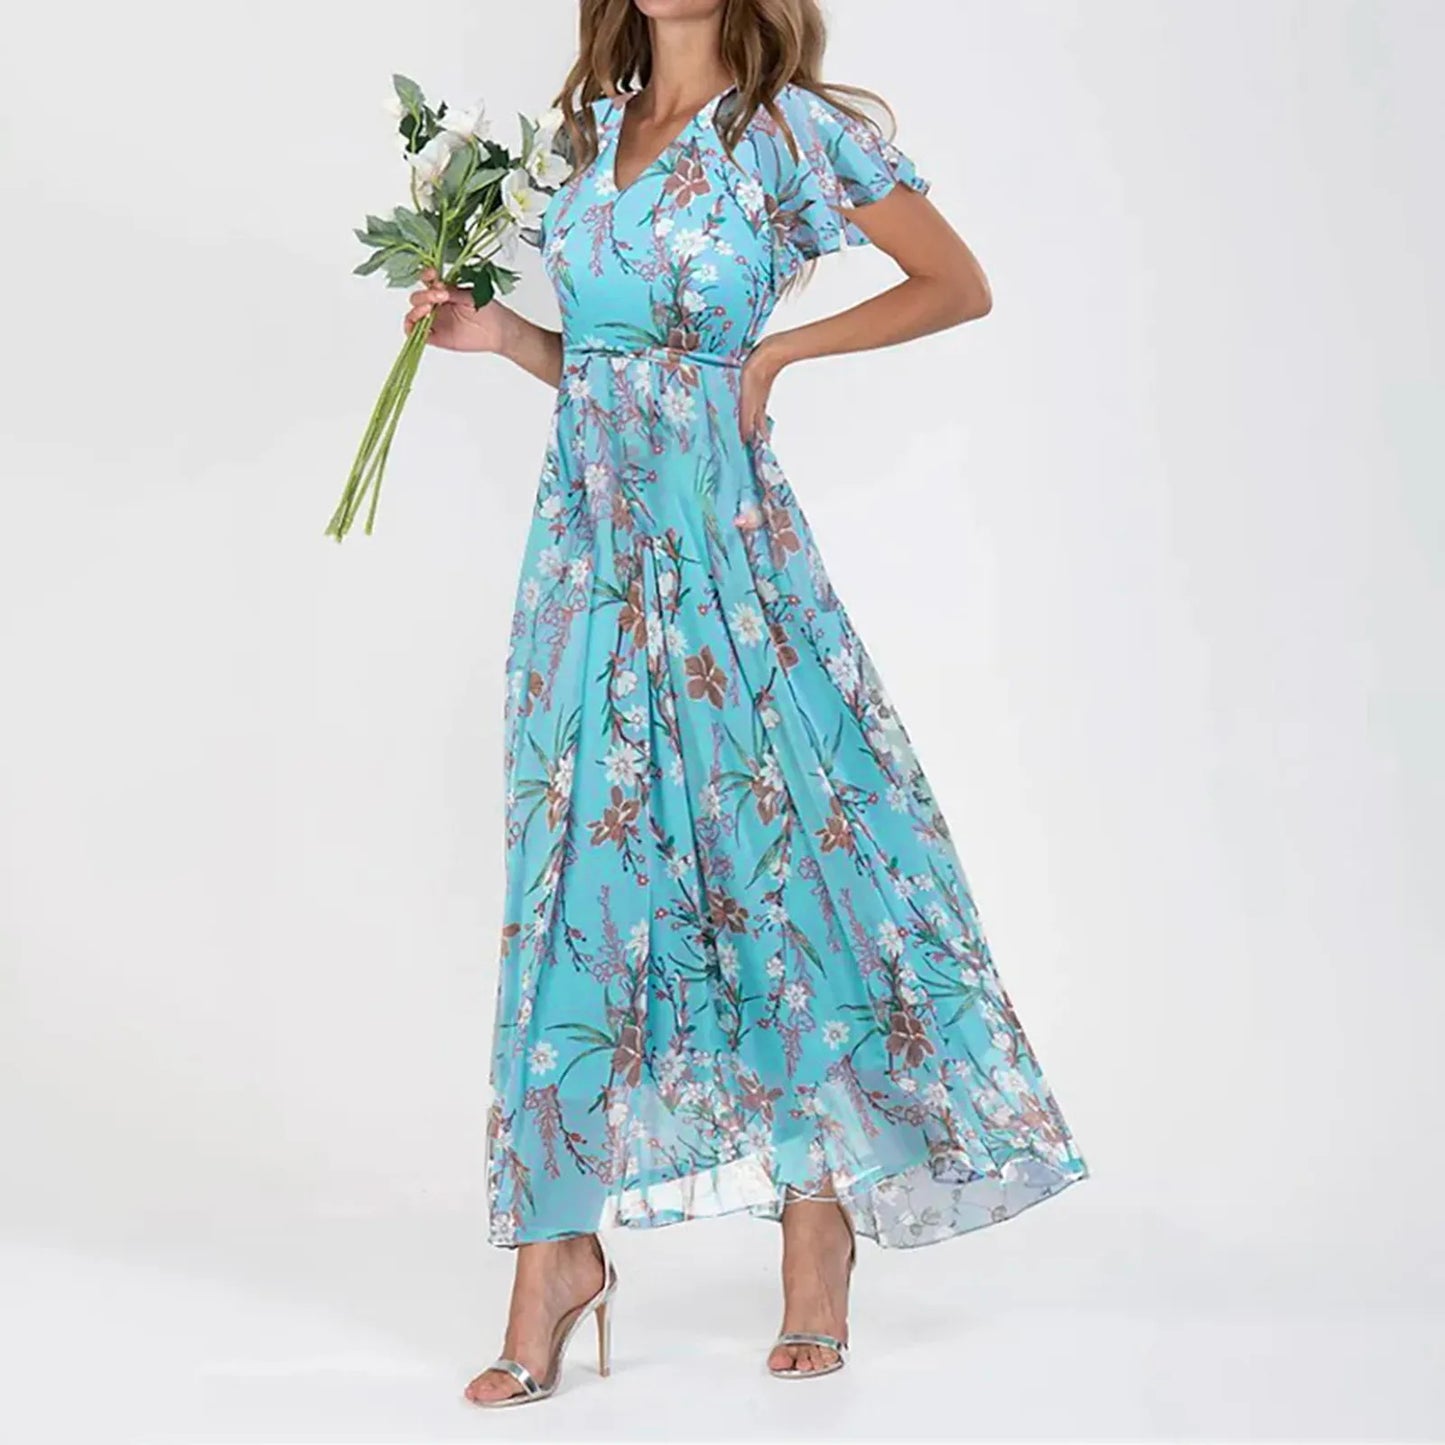 Midi Dresses- Floral Midi Dress for Spring Weddings & Garden Parties!- Sky Blue- Chuzko Women Clothing